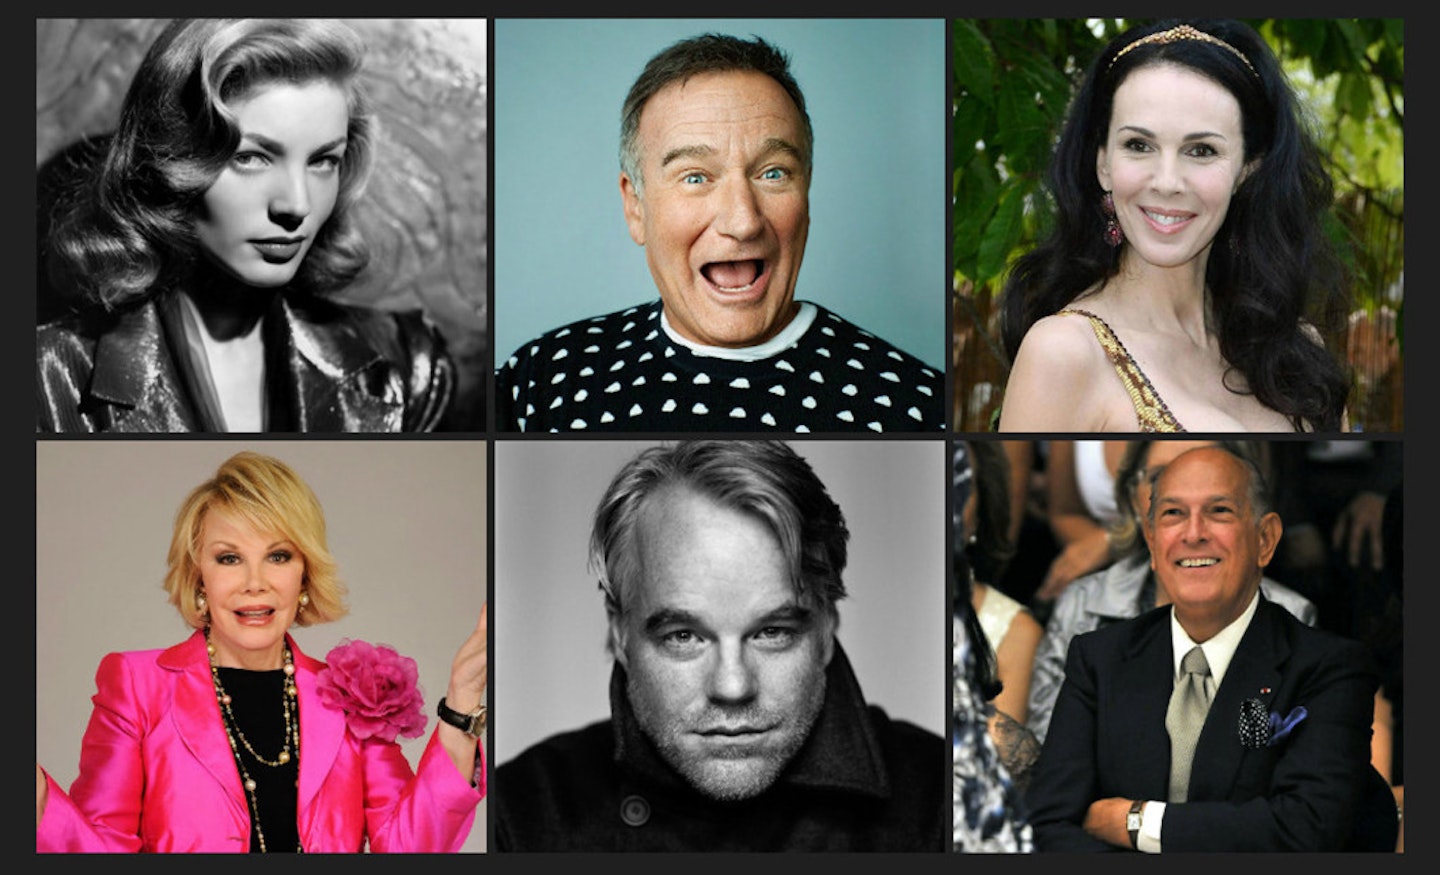 Clockwise from left: Lauren Bacall, Robin Williams, L'Wren Scott, Oscar de la Renta, Philip Seymour Hoffman, Joan Rivers